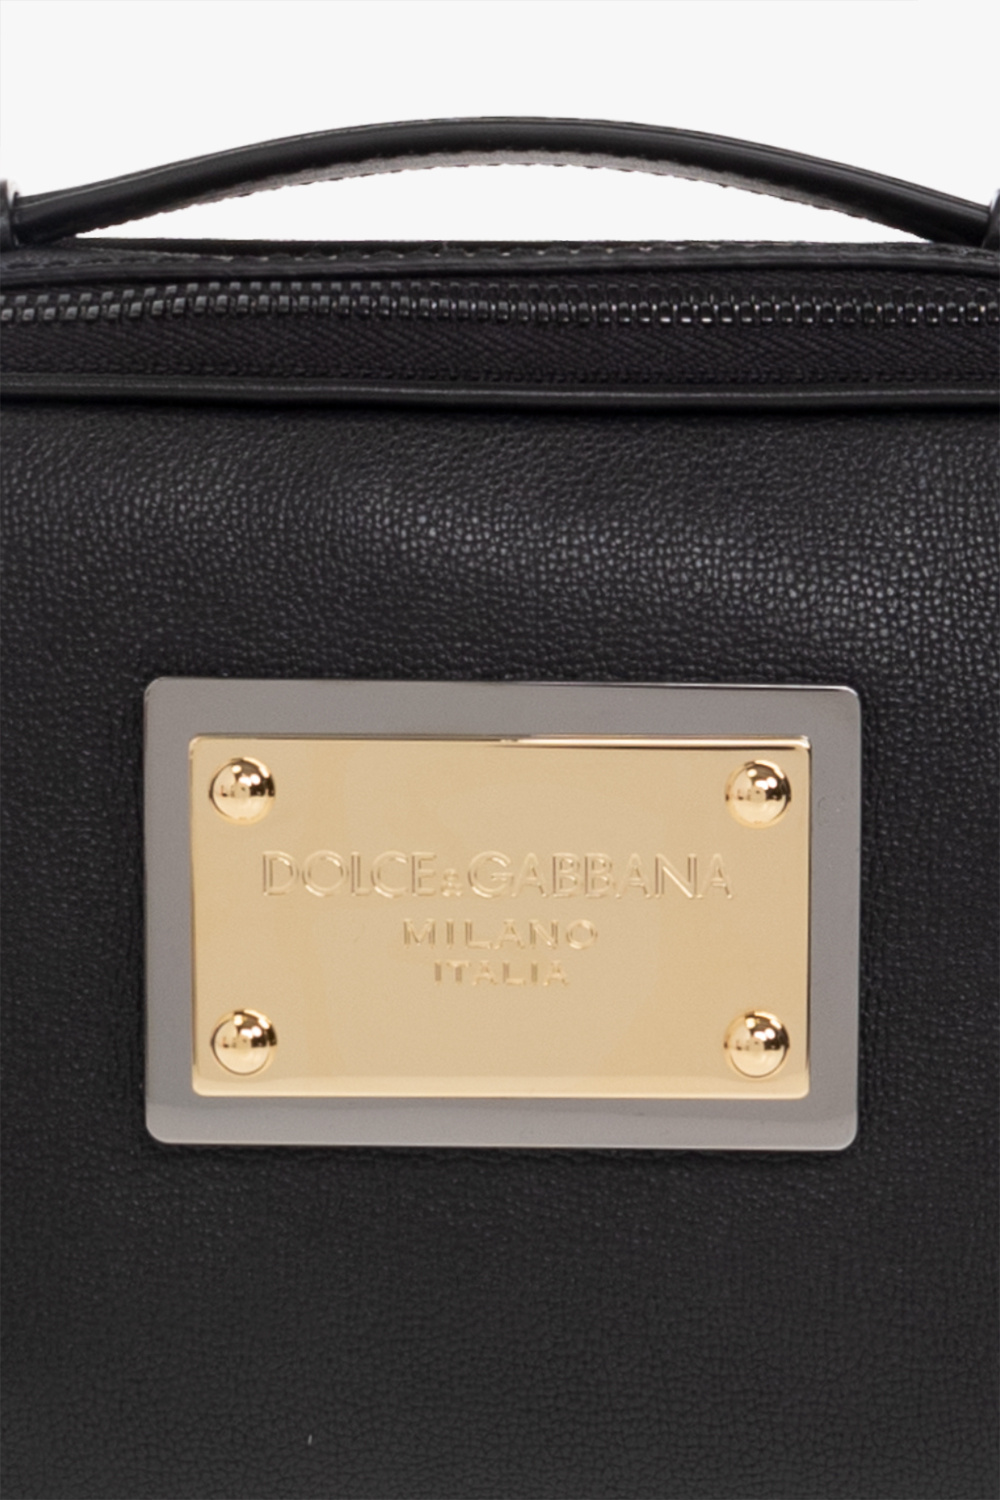 Dolce & Gabbana Leather belt bag